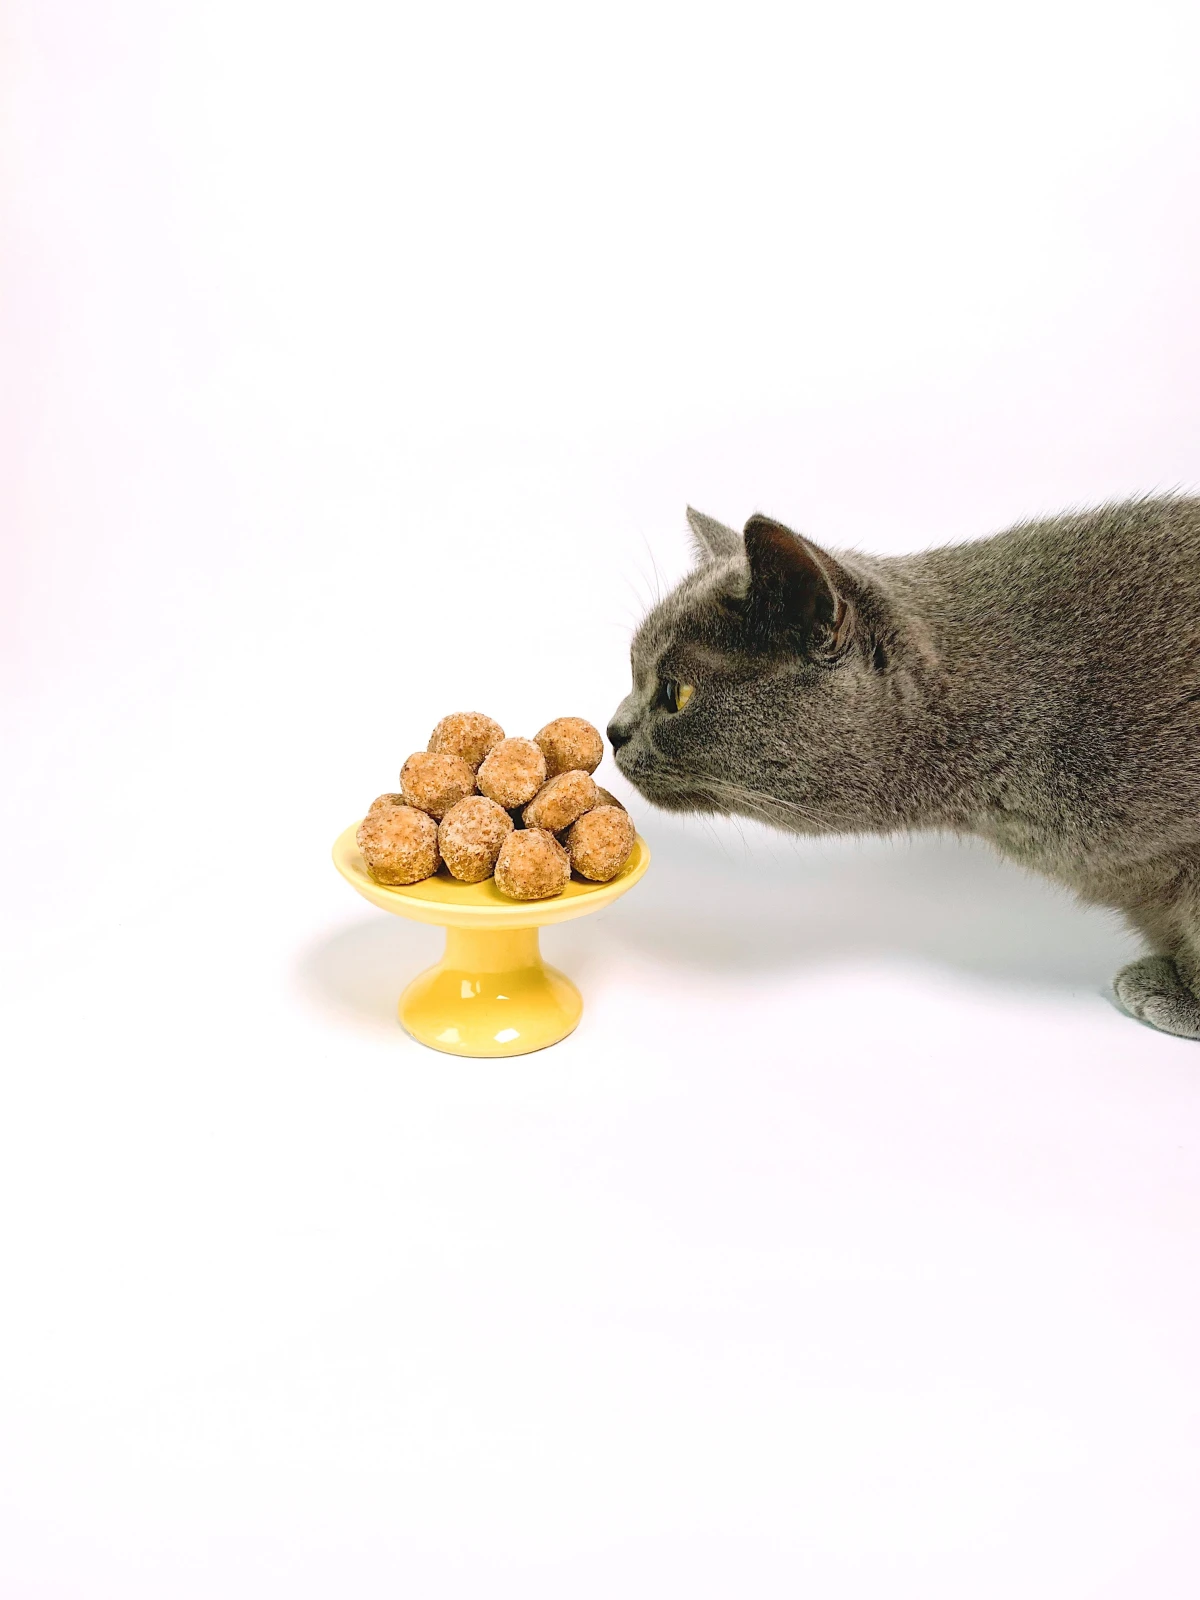 cat sniffing chocolate balls